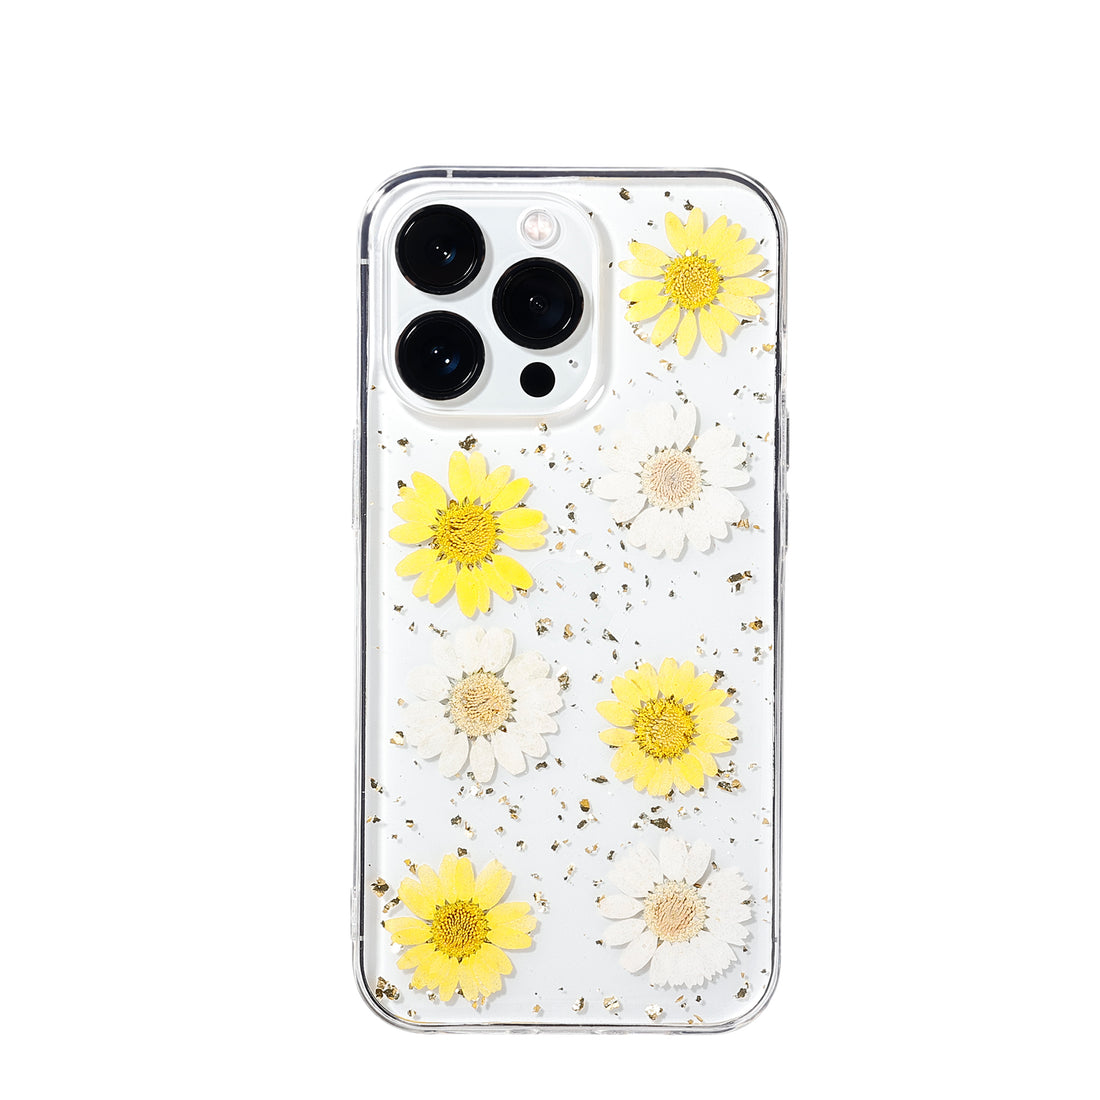 Sanne dried flowers phone case